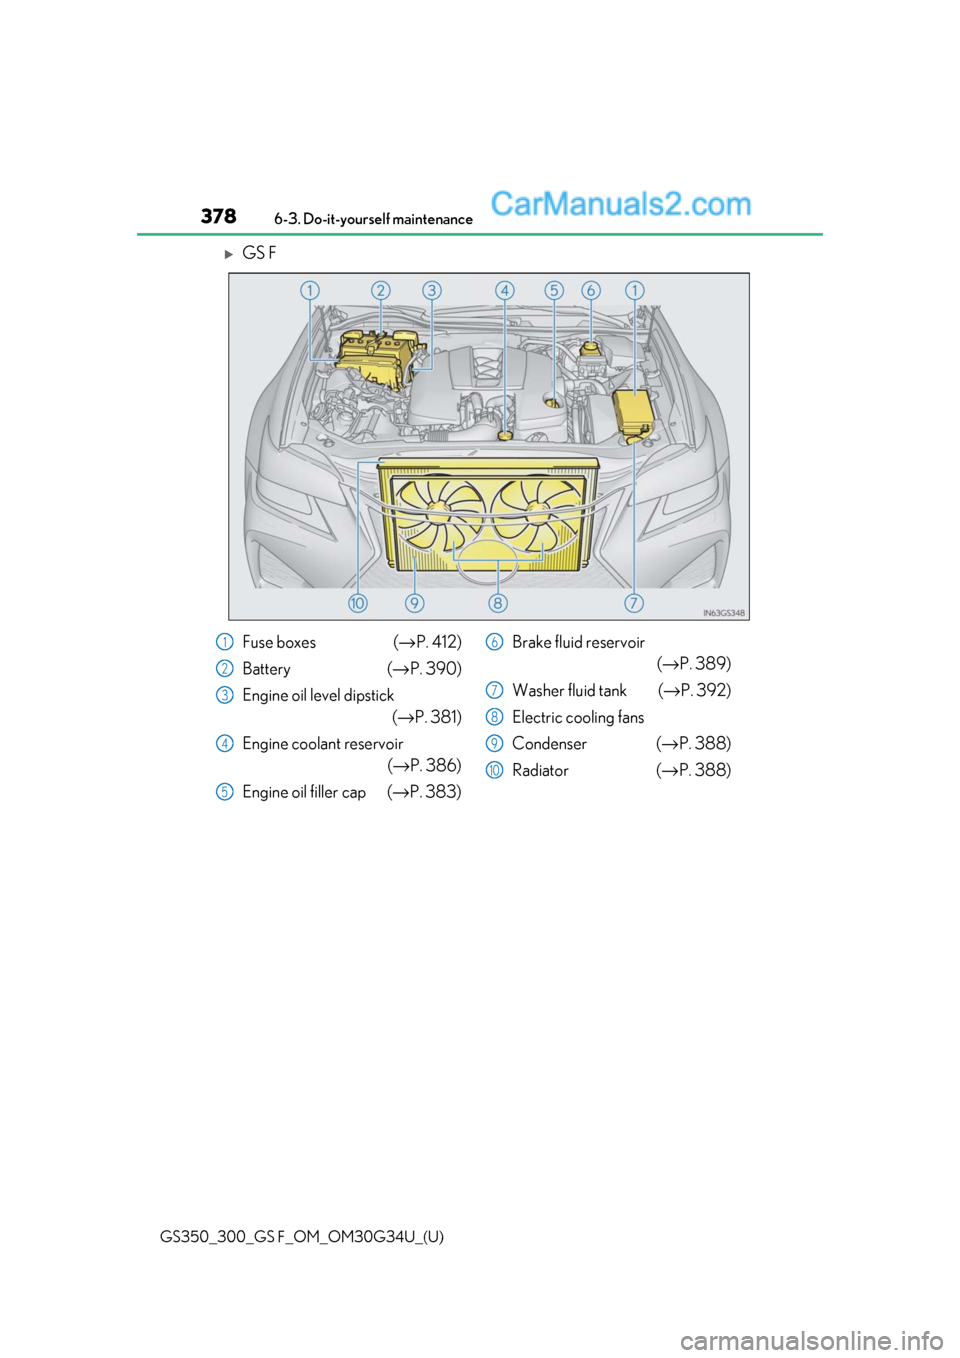 Lexus GS300 2018  s Owners Guide 378
GS350_300_GS F_OM_OM30G34U_(U)6-3. Do-it-yourself maintenance
GS F
Fuse boxes (→
P. 412)
Battery ( →P. 390)
Engine oil level dipstick (→P. 381)
Engine coolant reservoir (→P. 386)
Engine